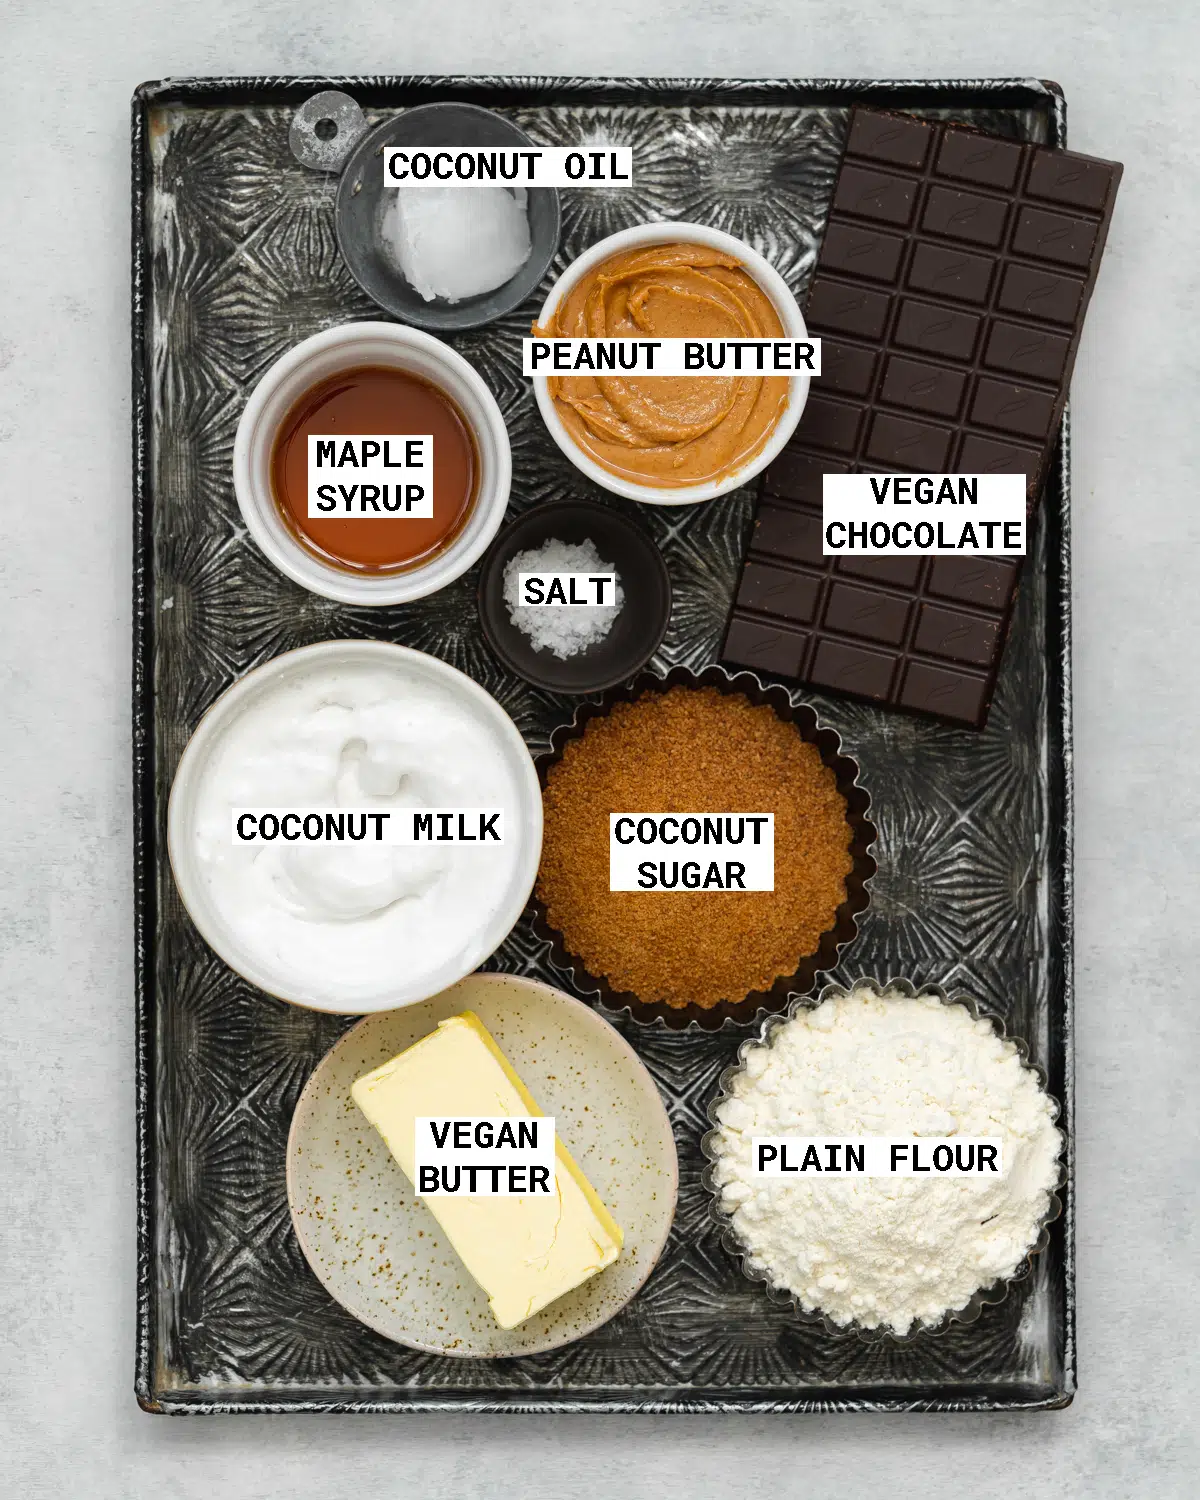 vintage metal tray with ingredients to make vegan peanut butter chocolate tart.